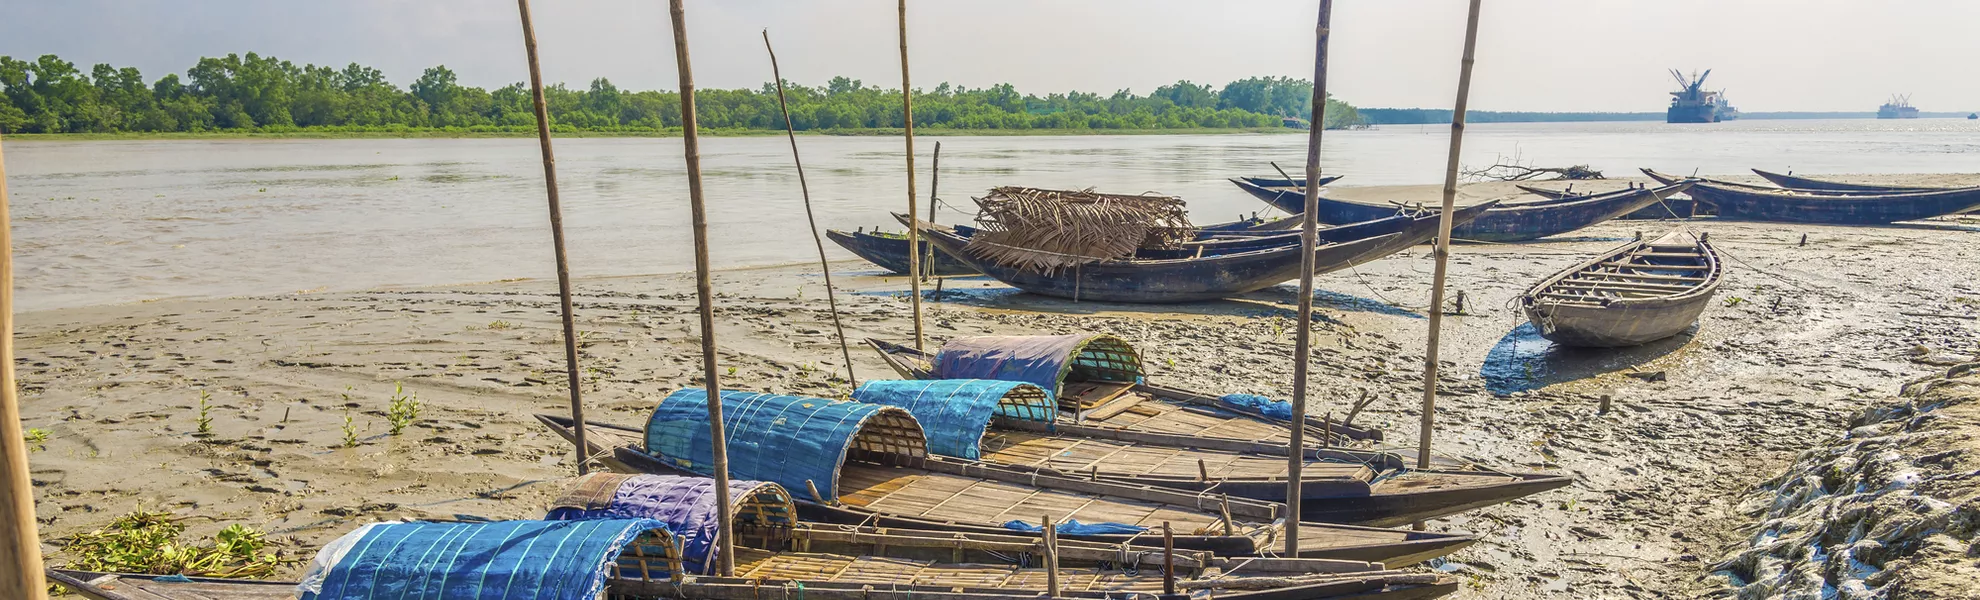 Sundarbans - © milosk50 - stock.adobe.com